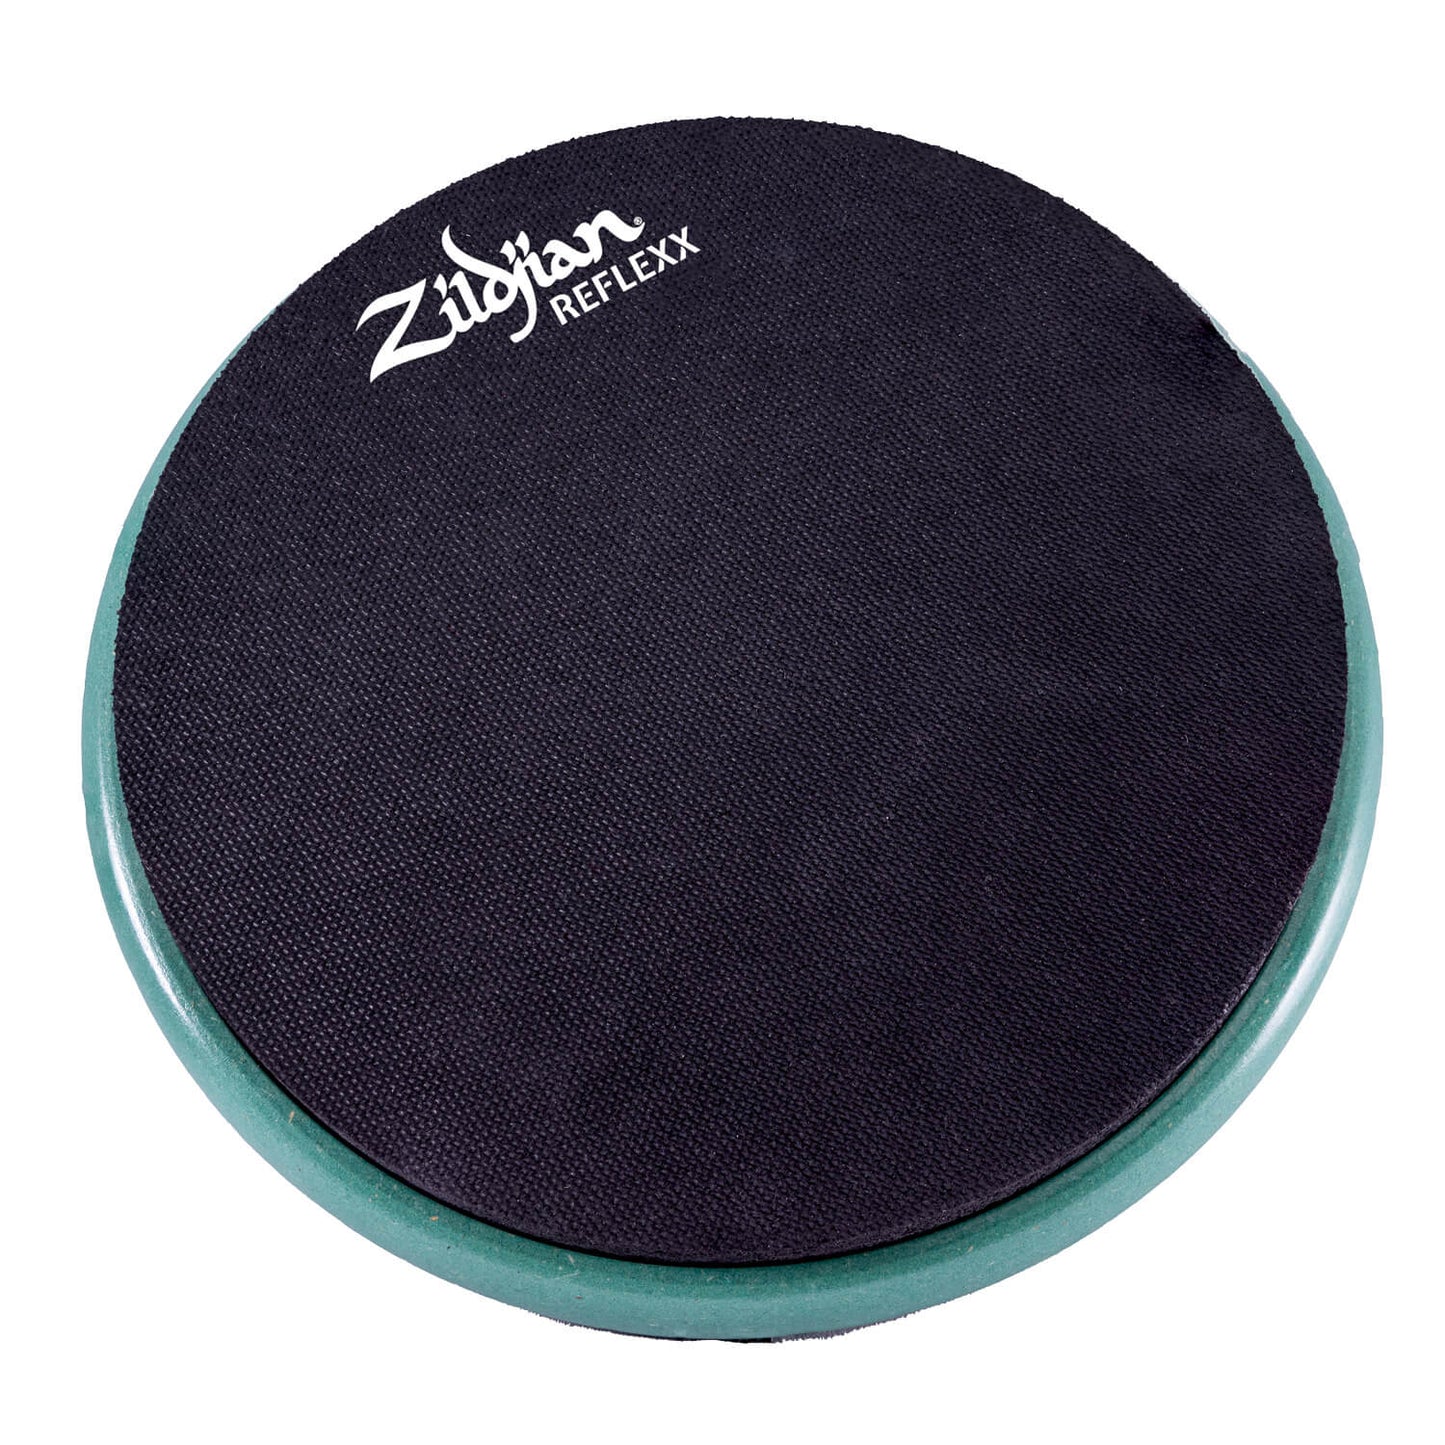 Zildjian Reflexx Conditioning Pad - Green